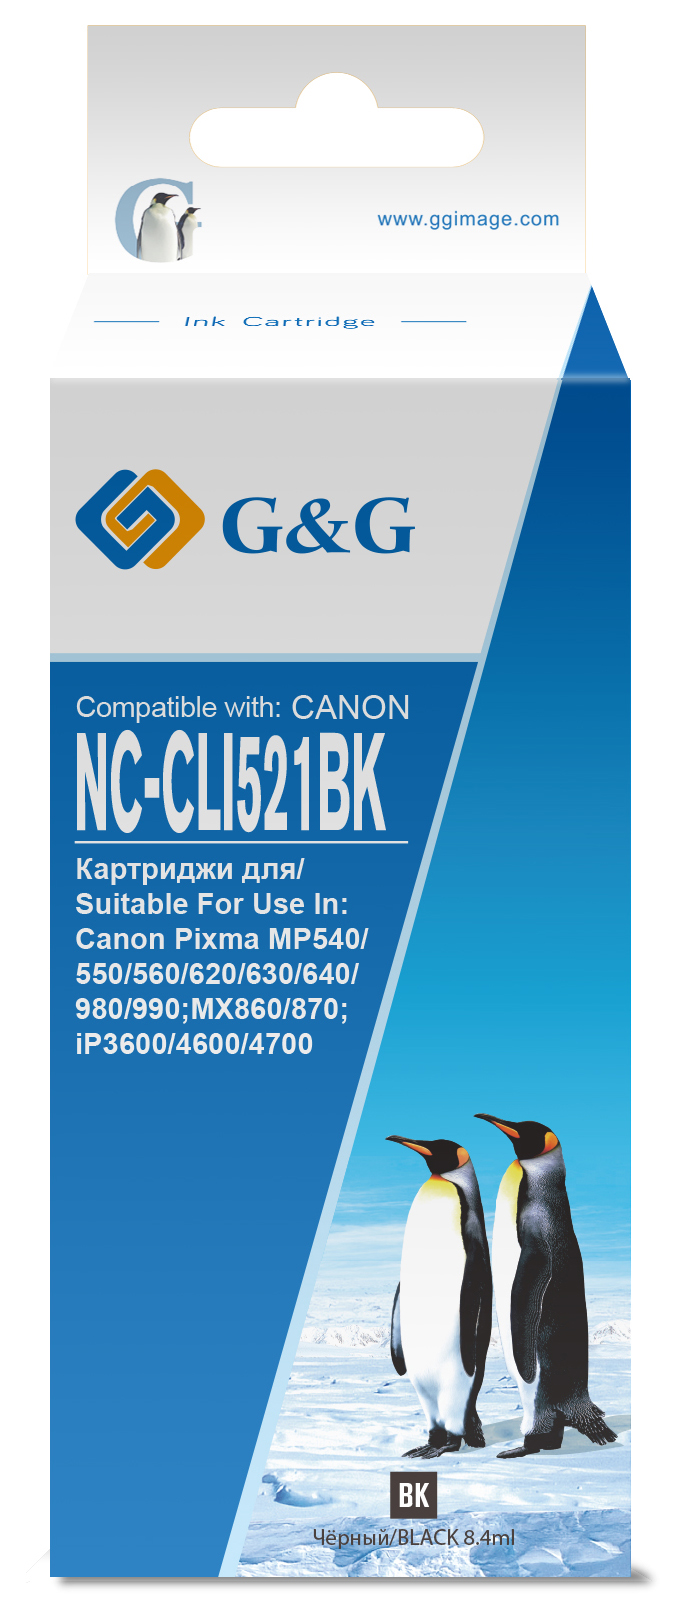 nc-cli521bk_1